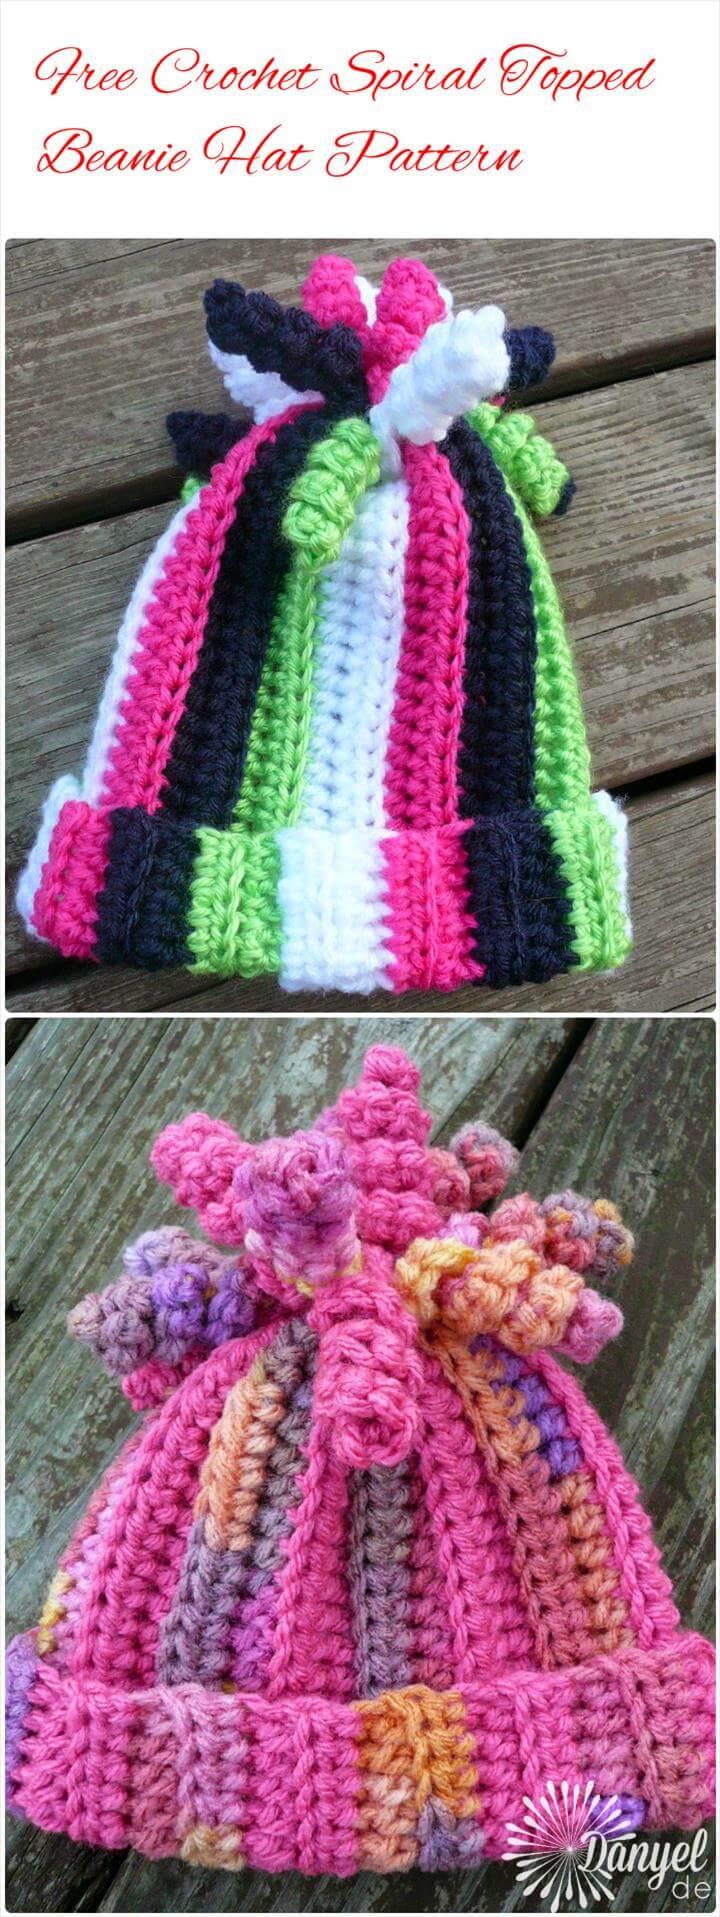 crochet spiral topped beanie hat